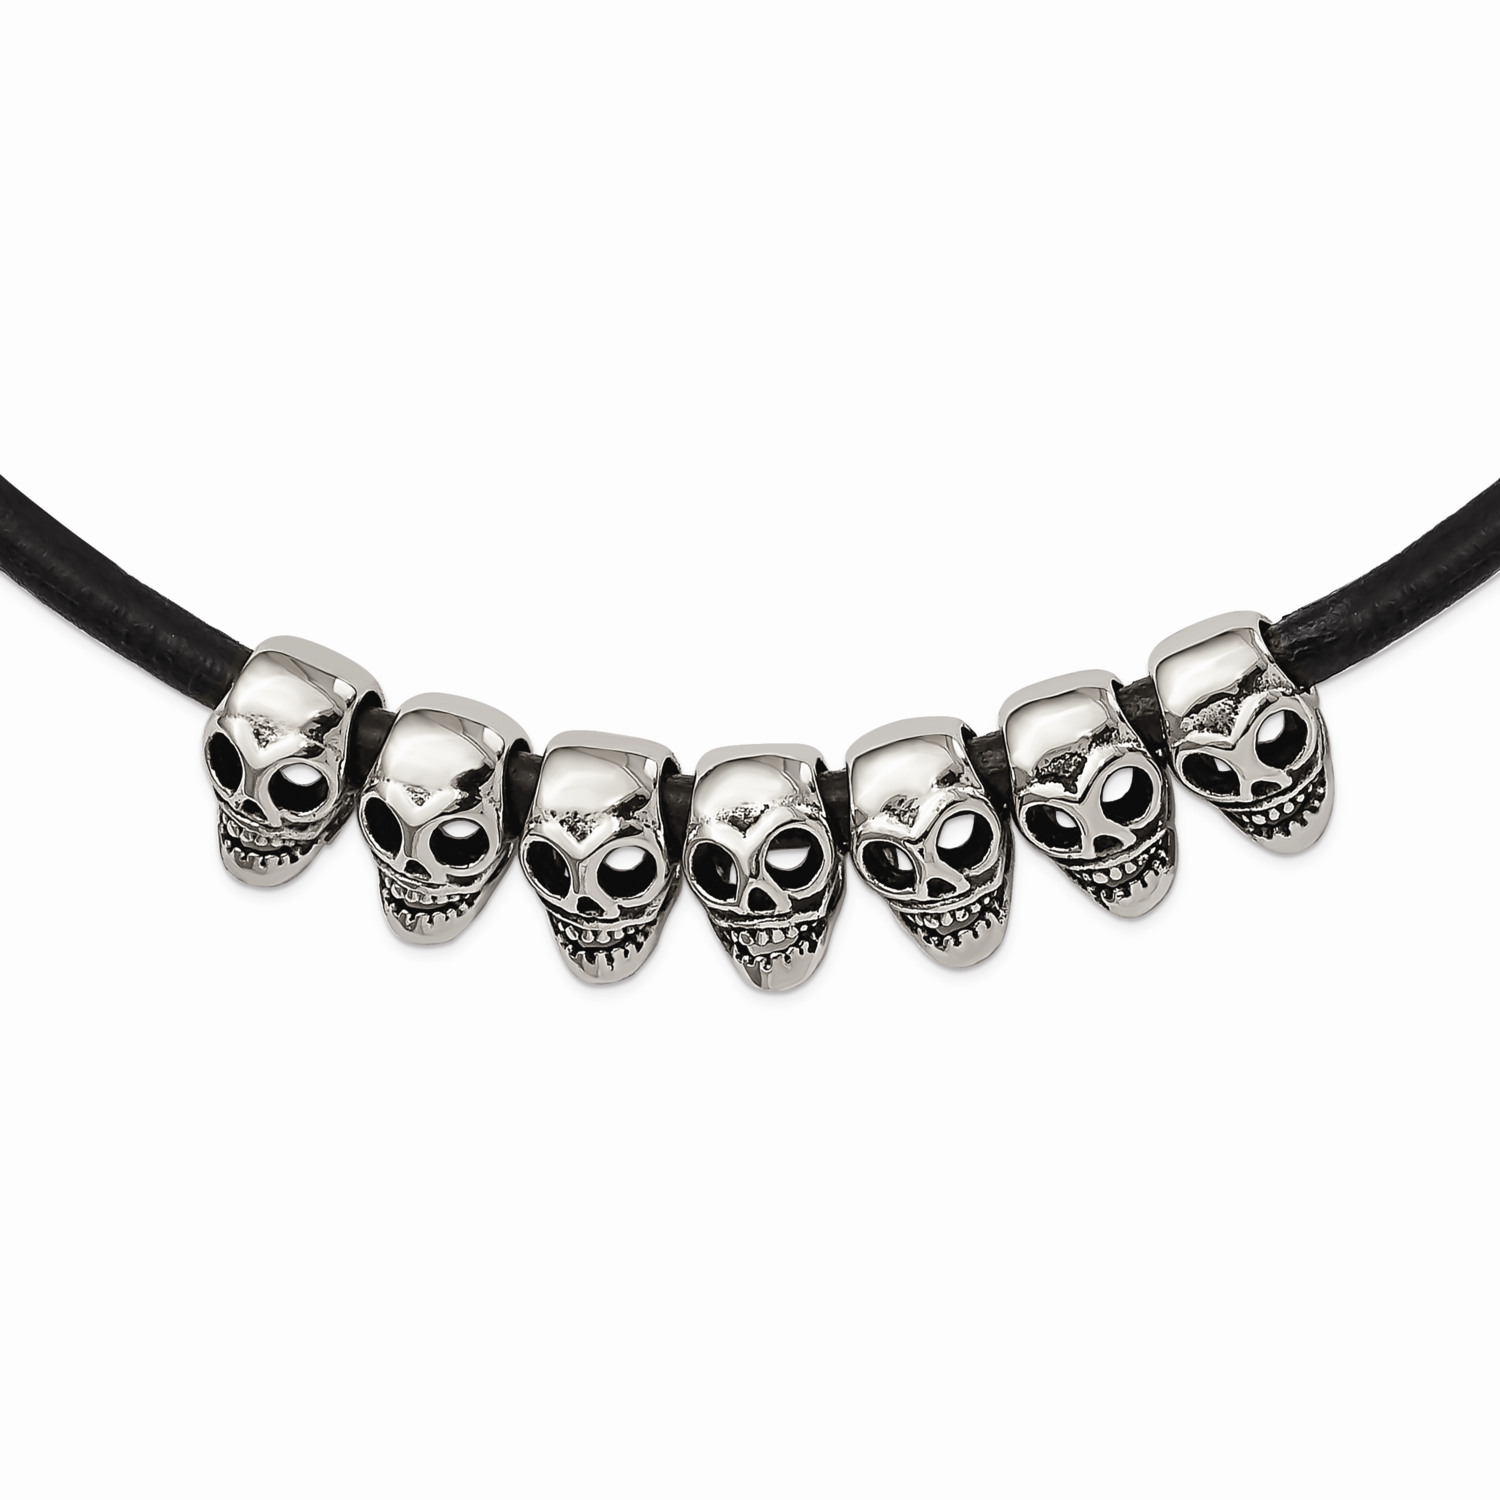 Antiqued Skulls Black Leather Cord Necklace Stainless Steel Polished SRN1689-18